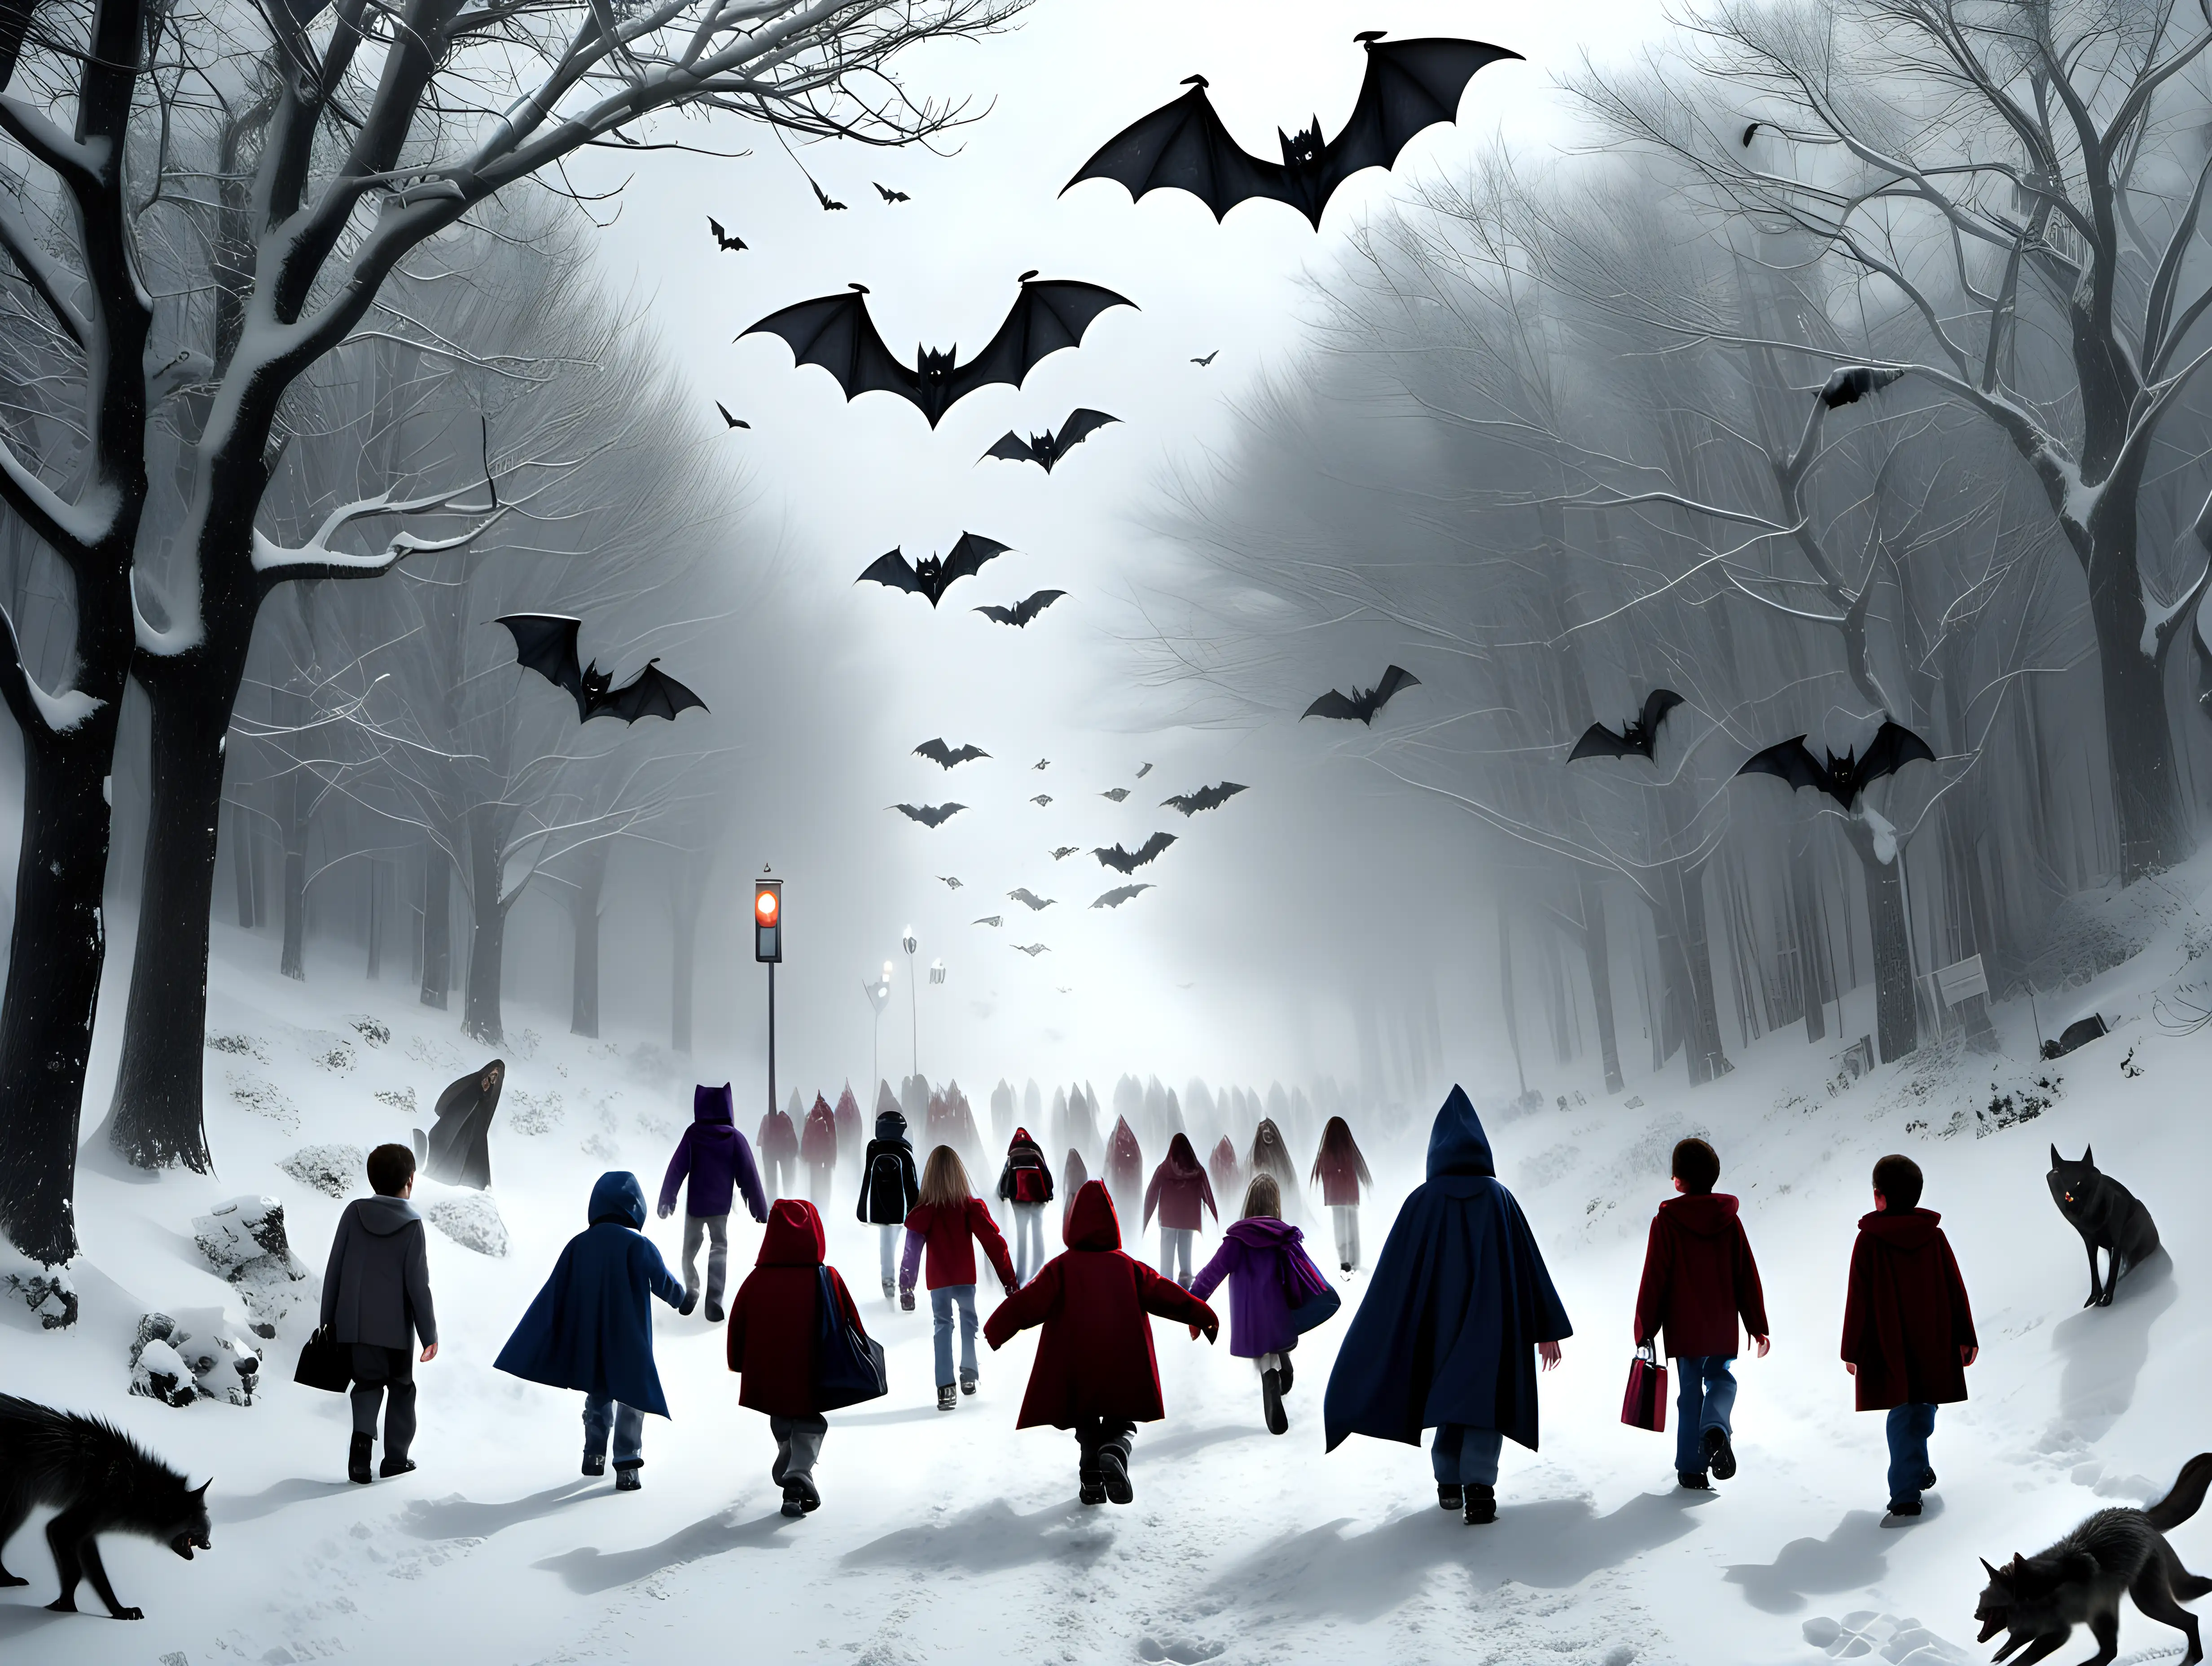 Brave Children Confronting Winters Supernatural Blizzard on School Commute